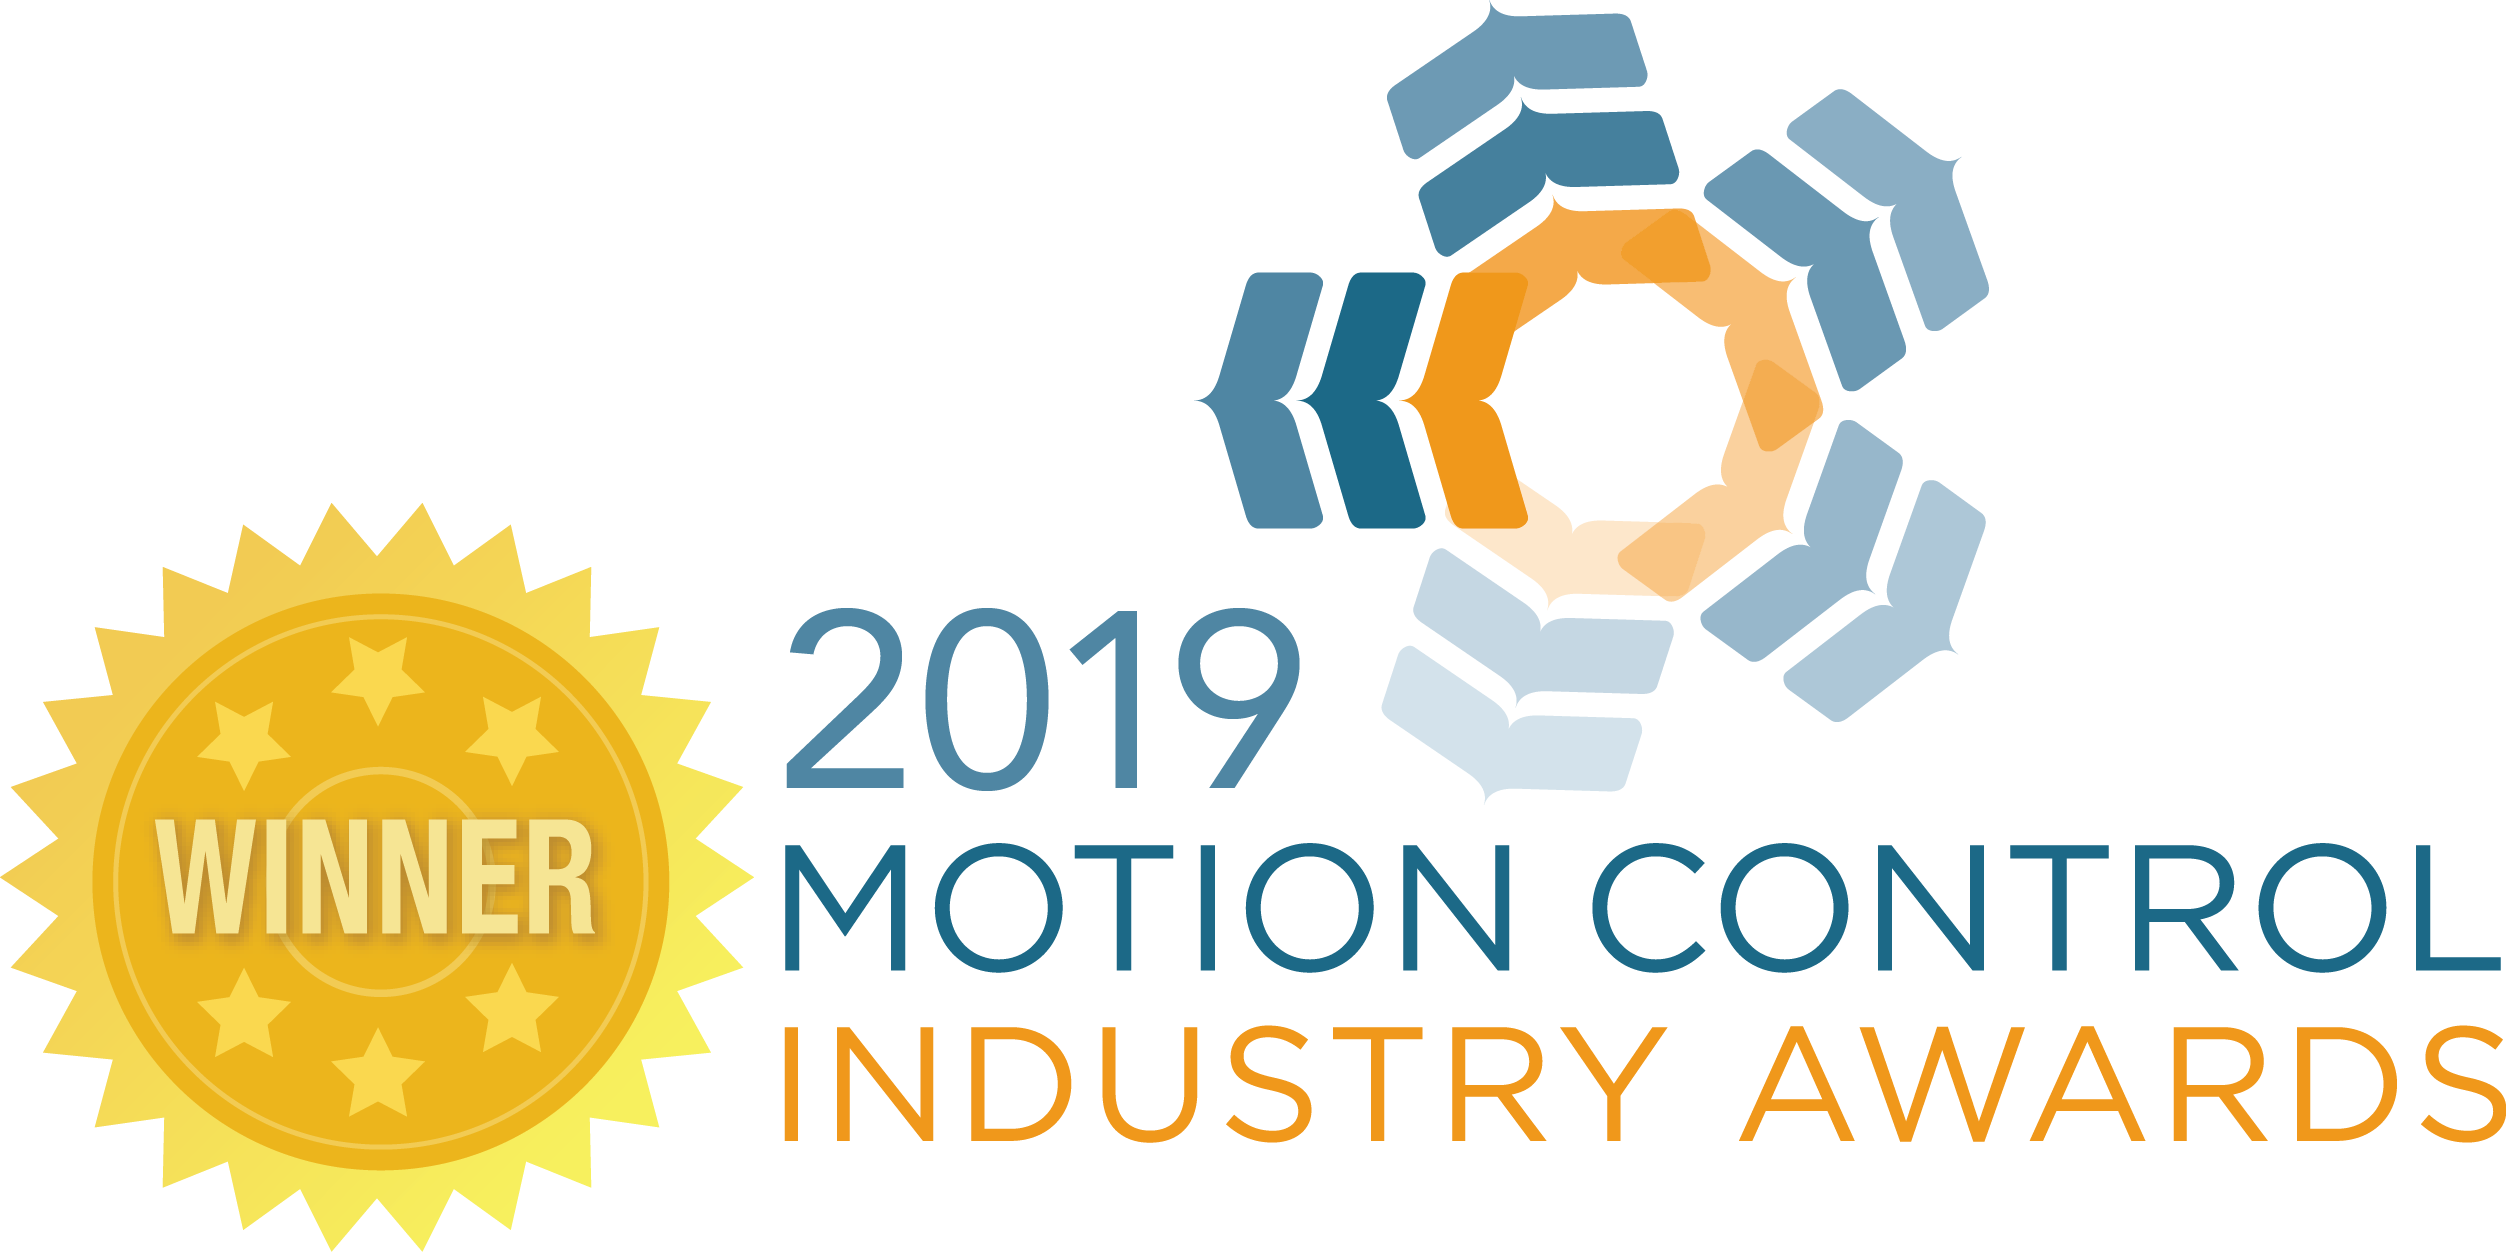 Motion Control Industry Awards Winners Logo